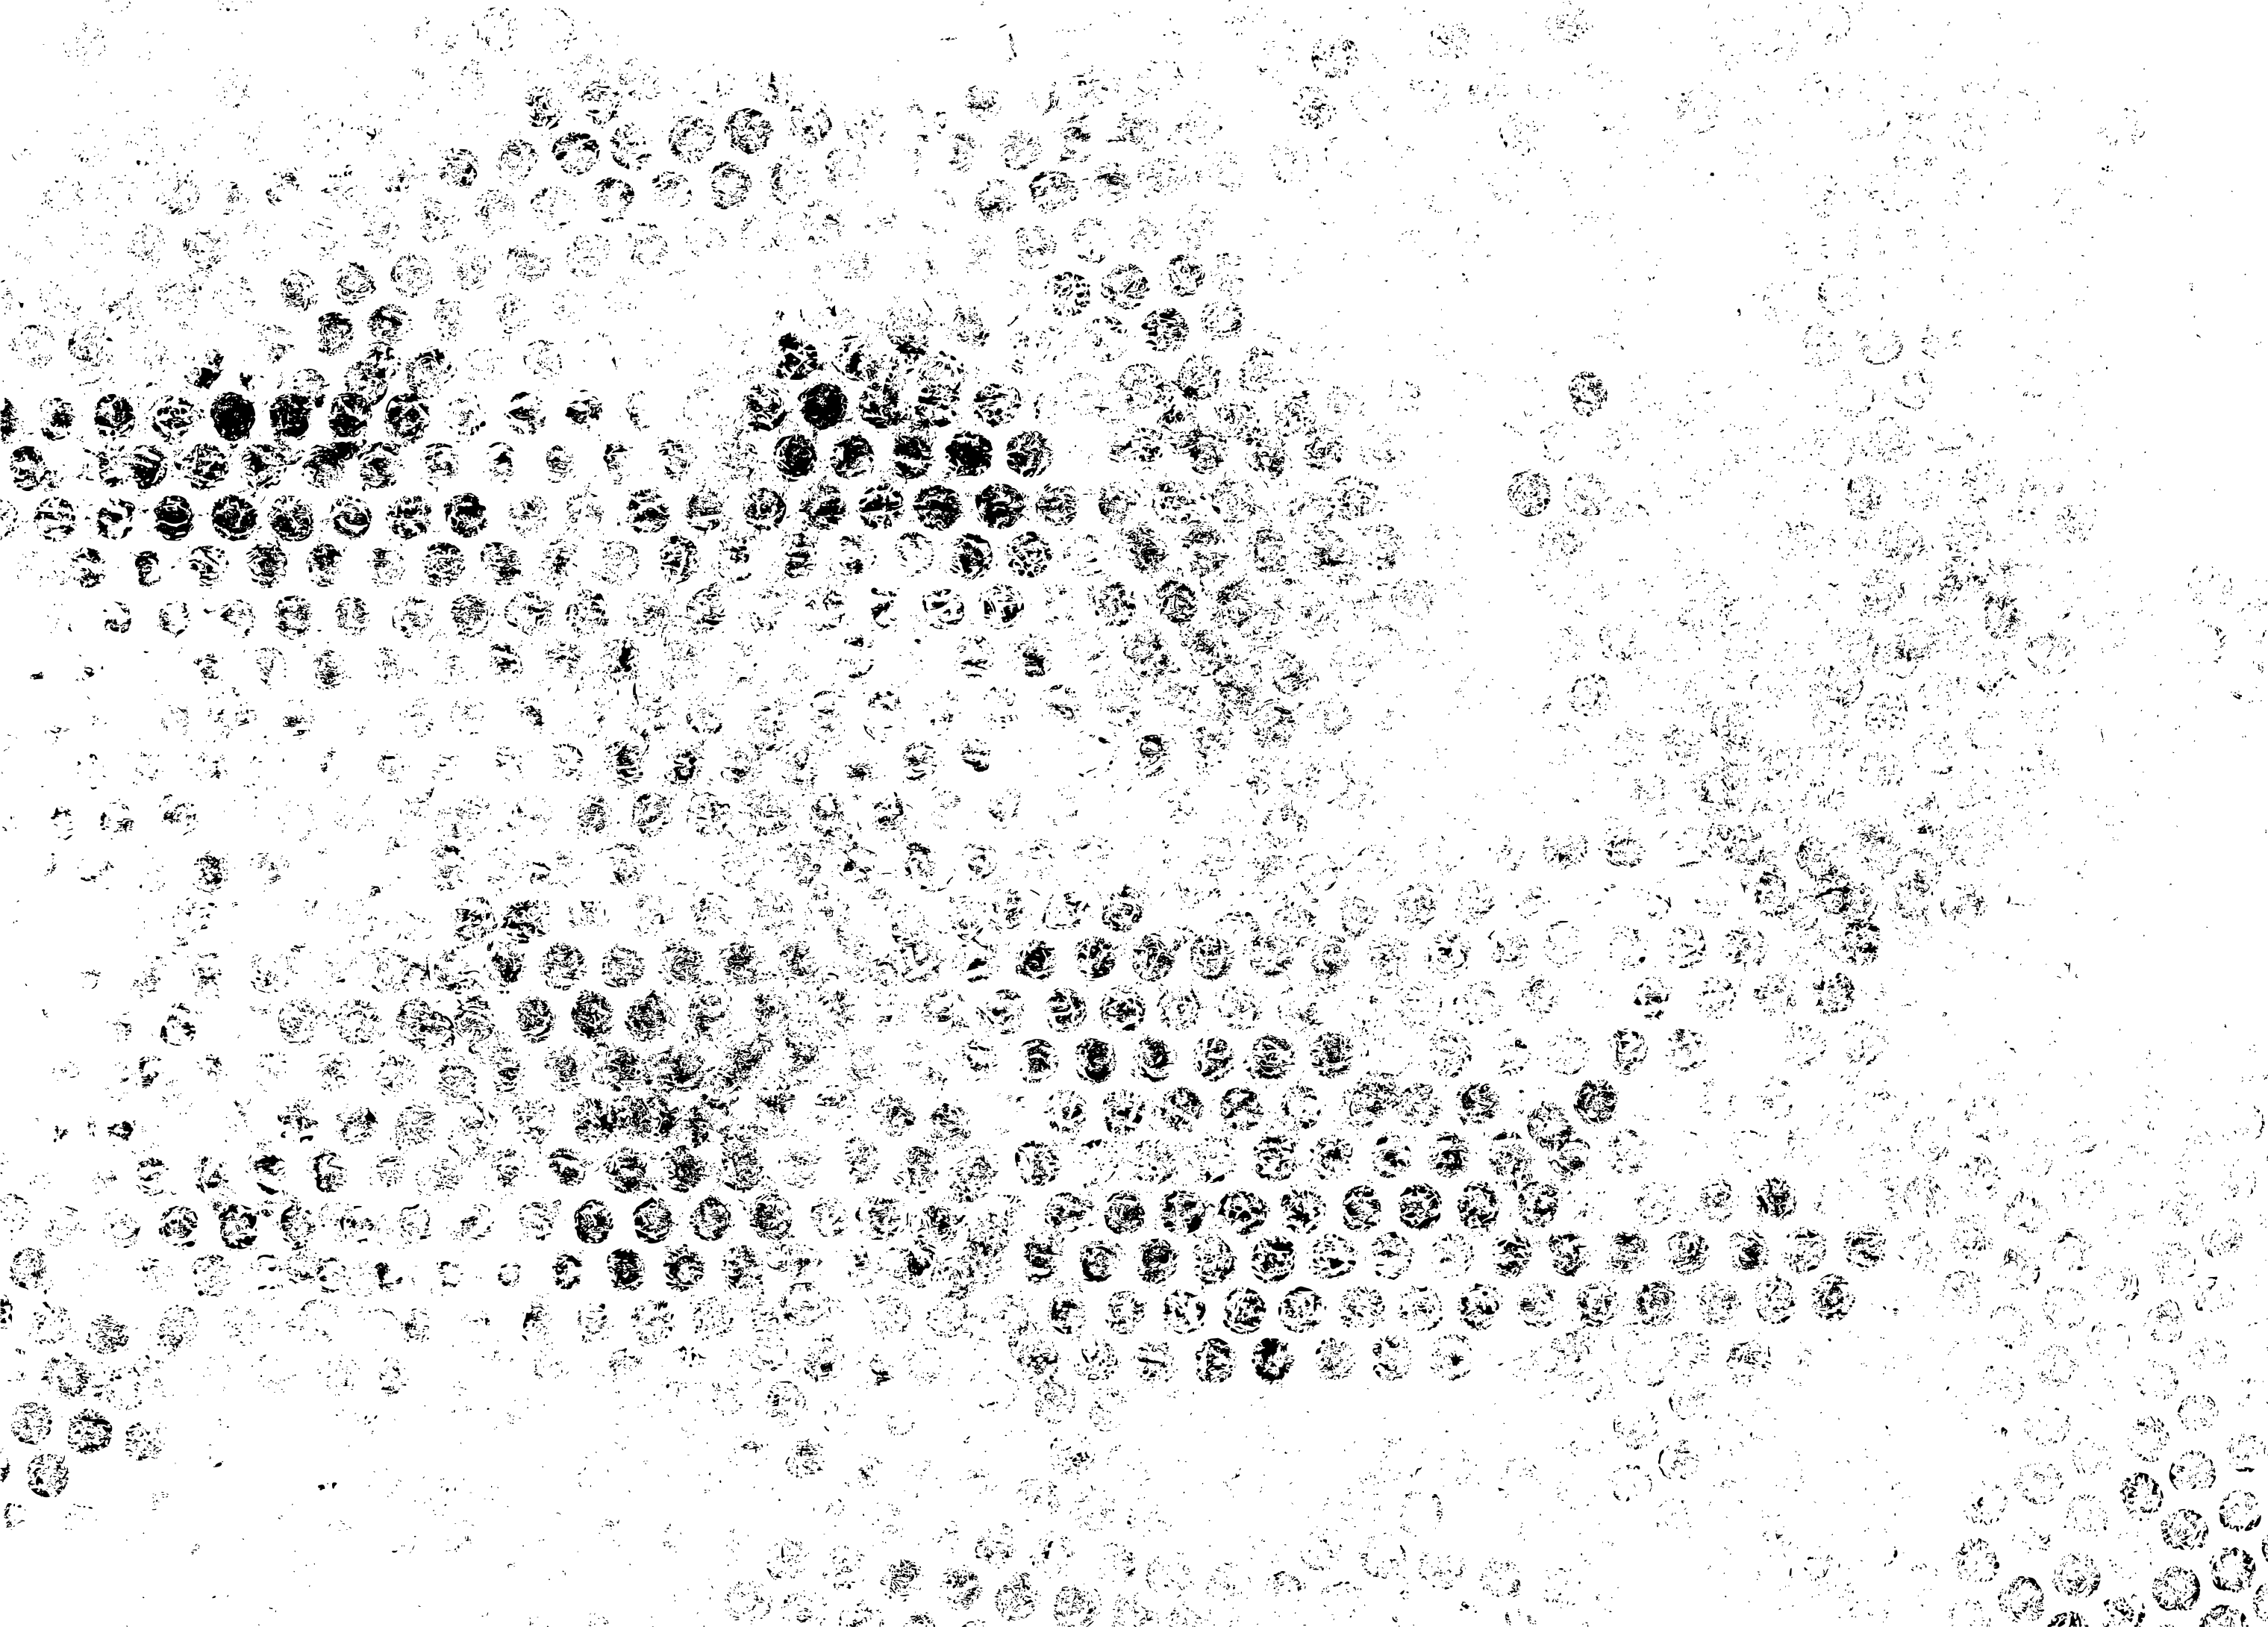 6 Grunge Dots Overlay (PNG Transparent).